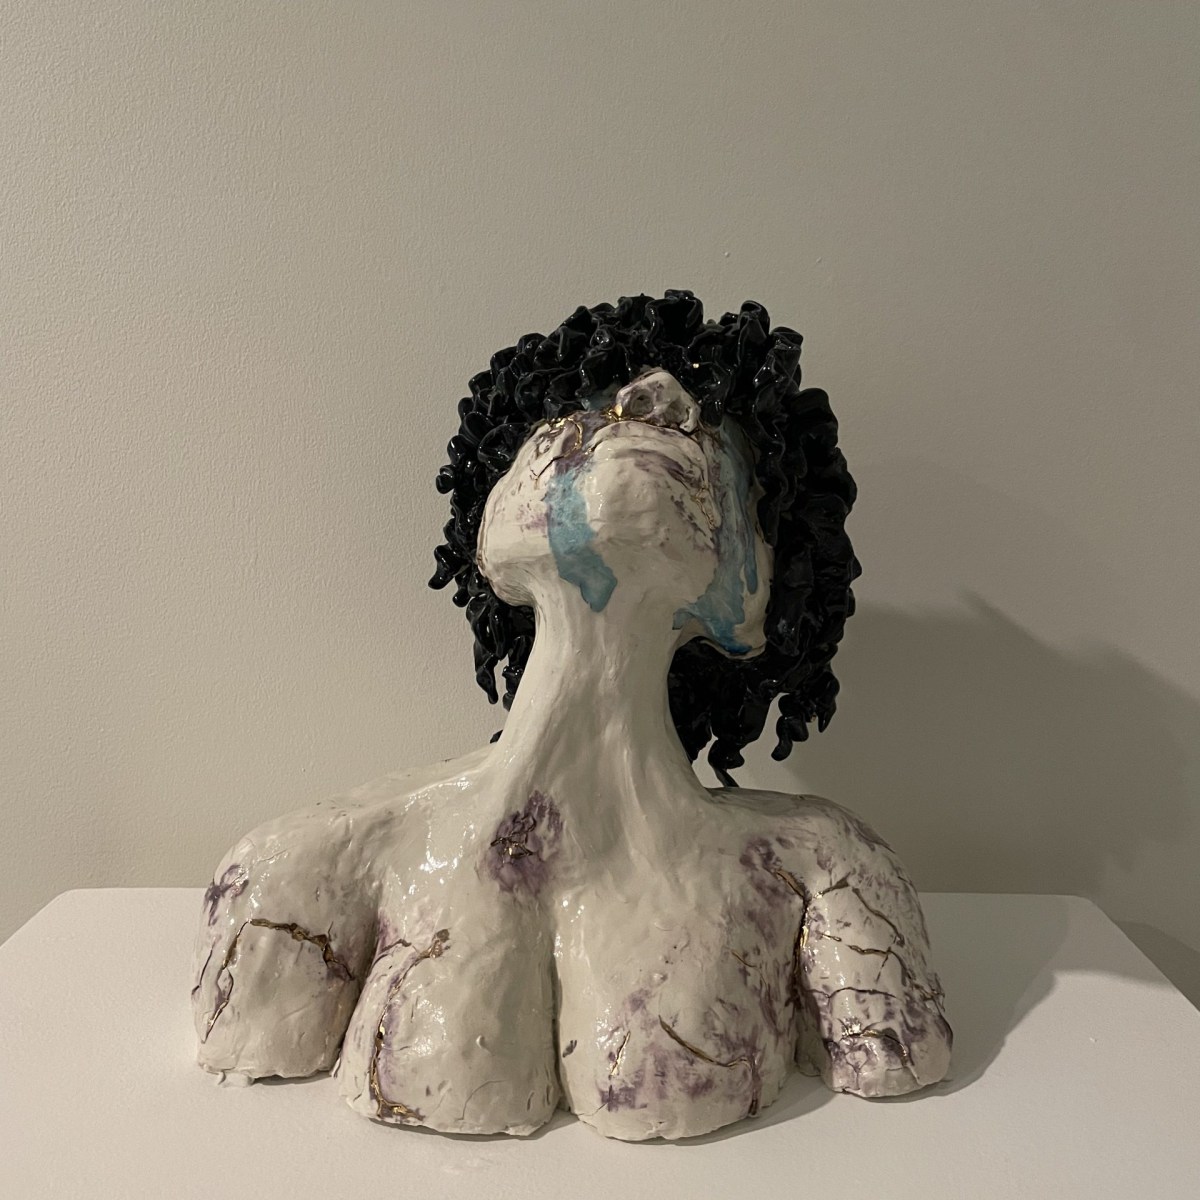 The stories behind Cherylle Booker’s sculptures 